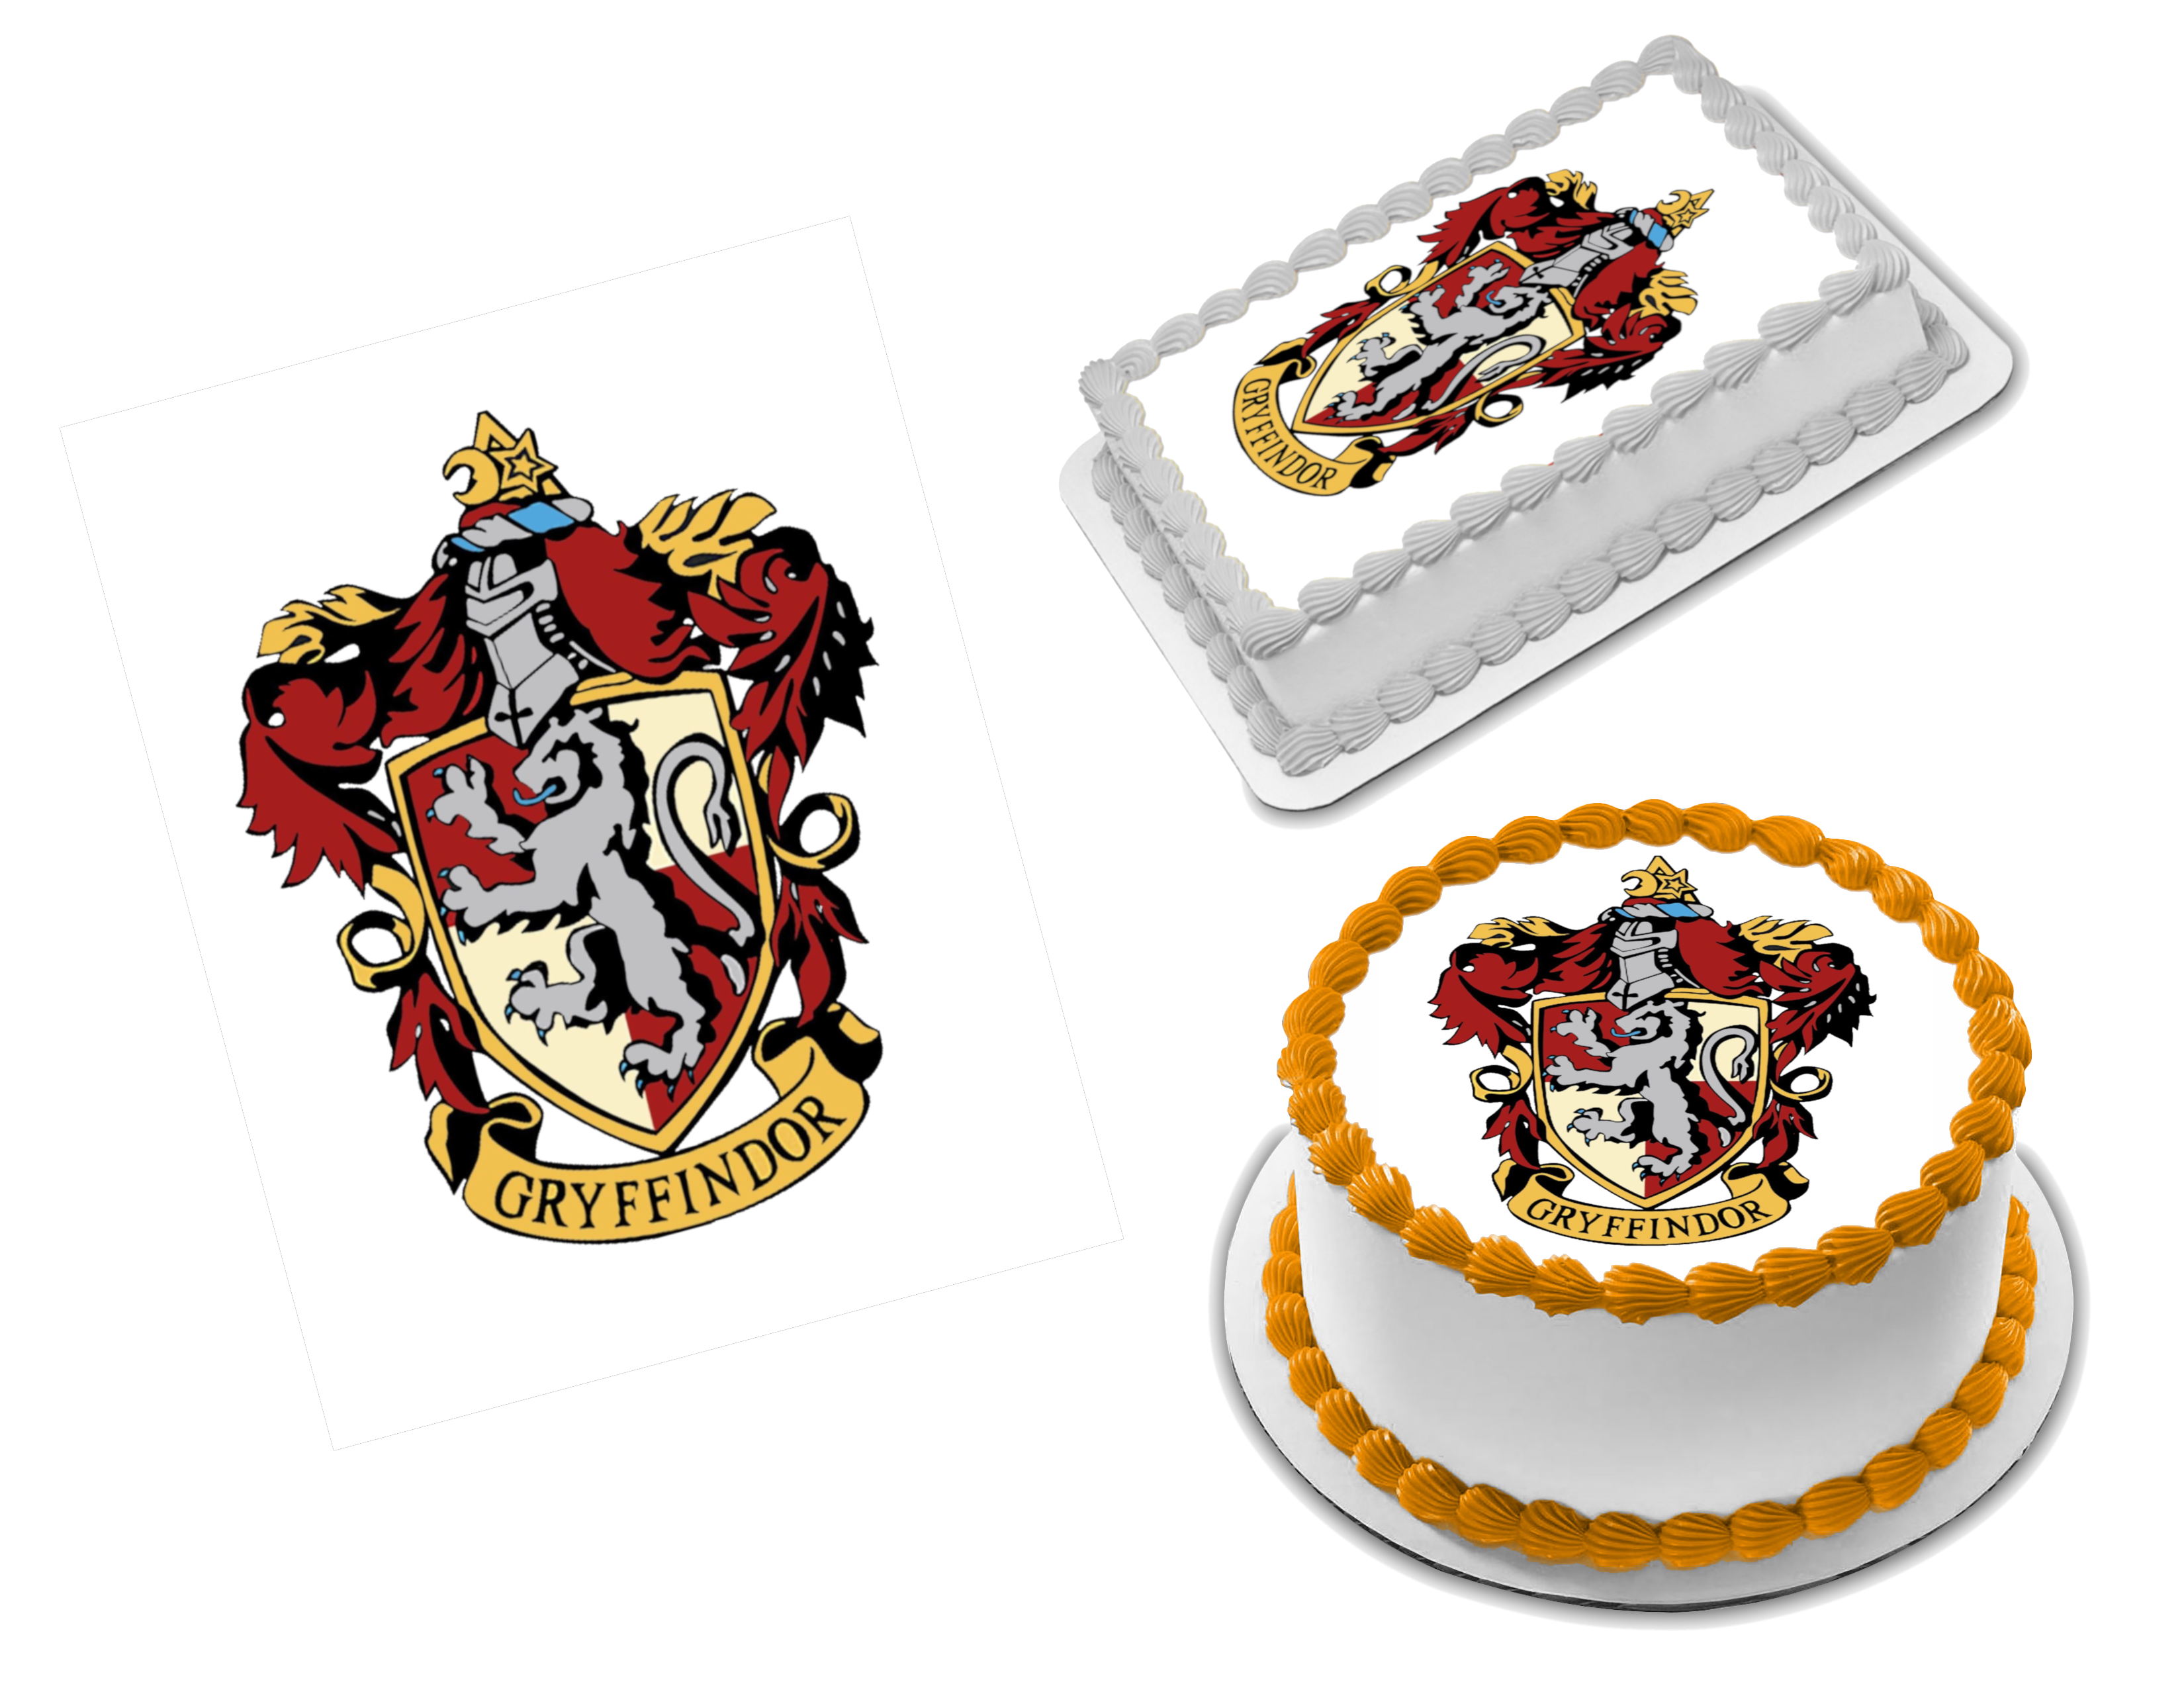 Harry Potter Hogwarts Edible Image Photo Sugar Frosting Icing Cake Topper Sheet Personalized Custom